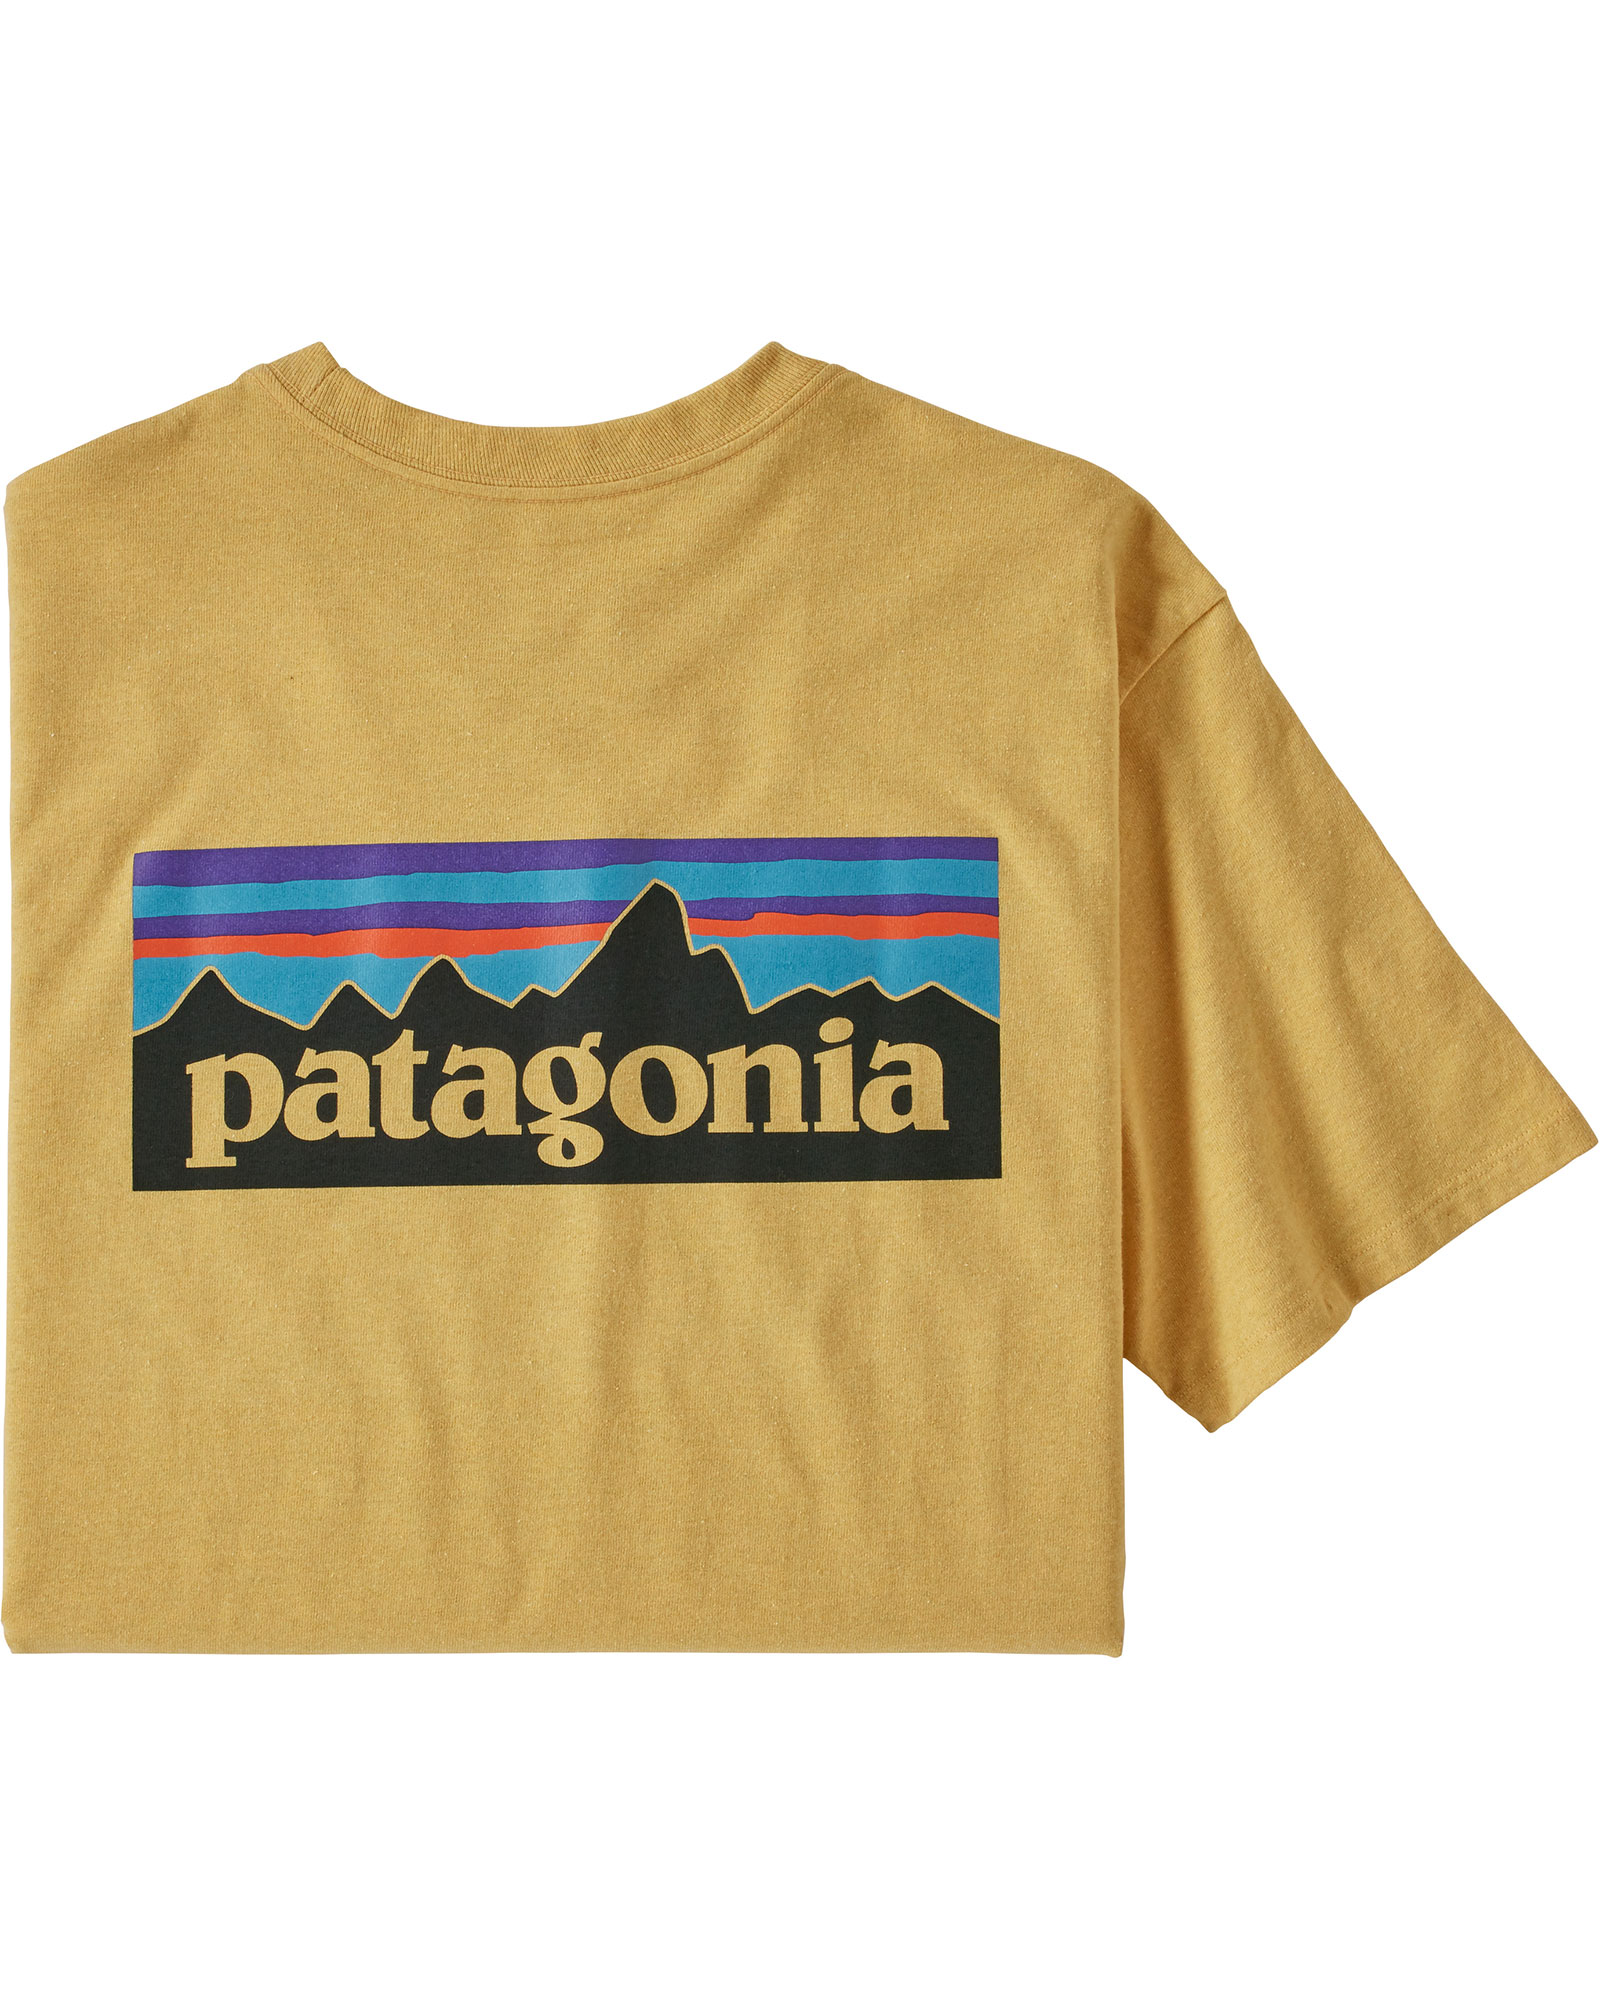 Patagonia P6 Logo Men’s Responsibili Tee - Surfboard Yellow S